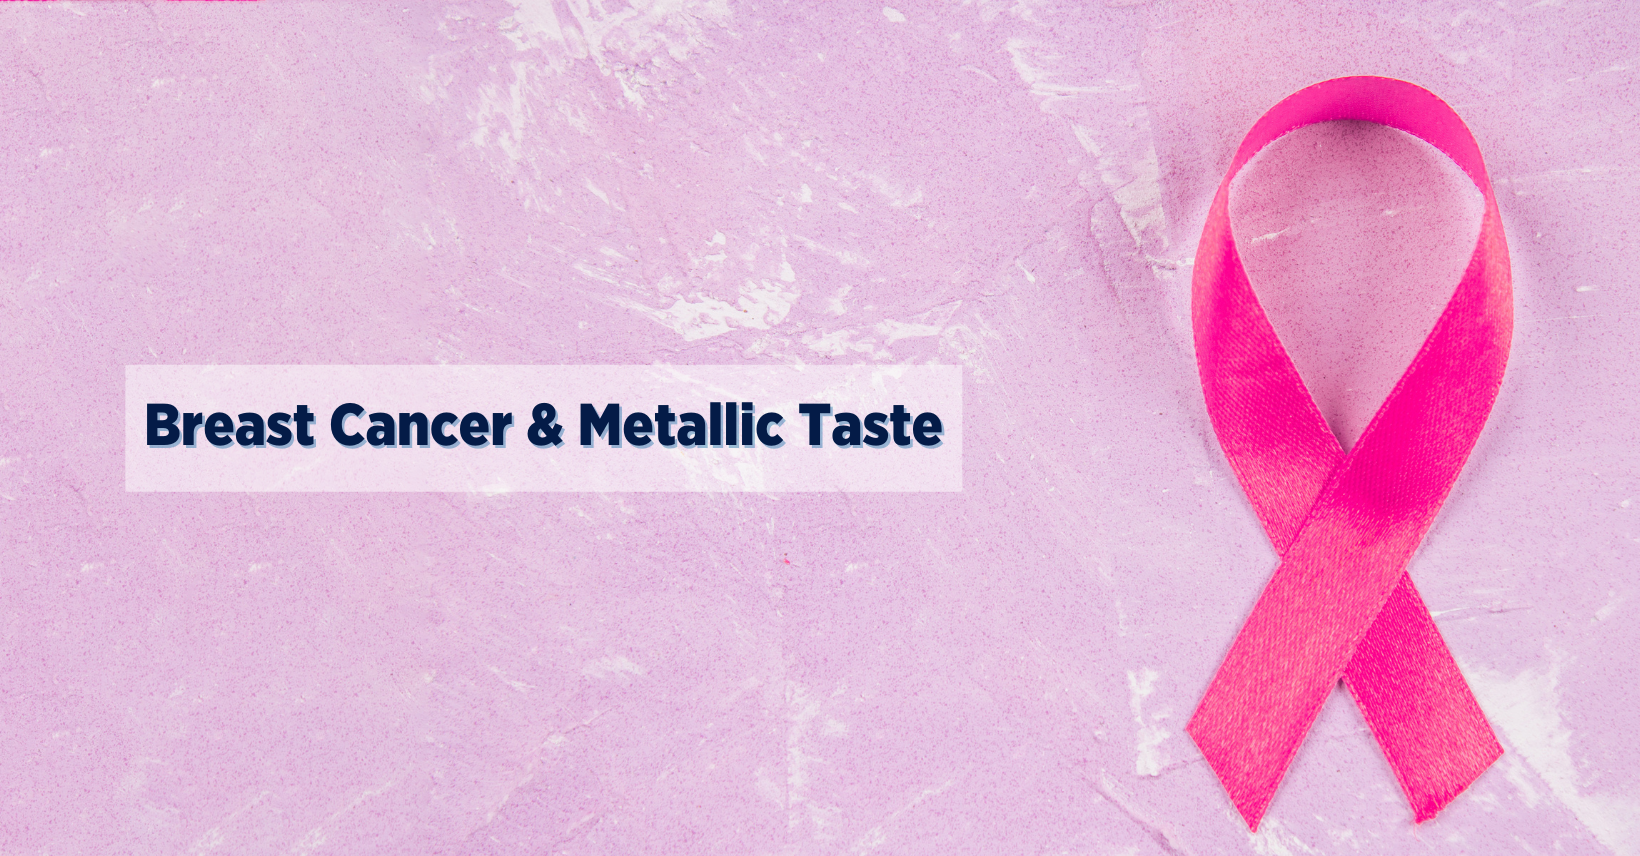 Metallic taste and breast cancer 3